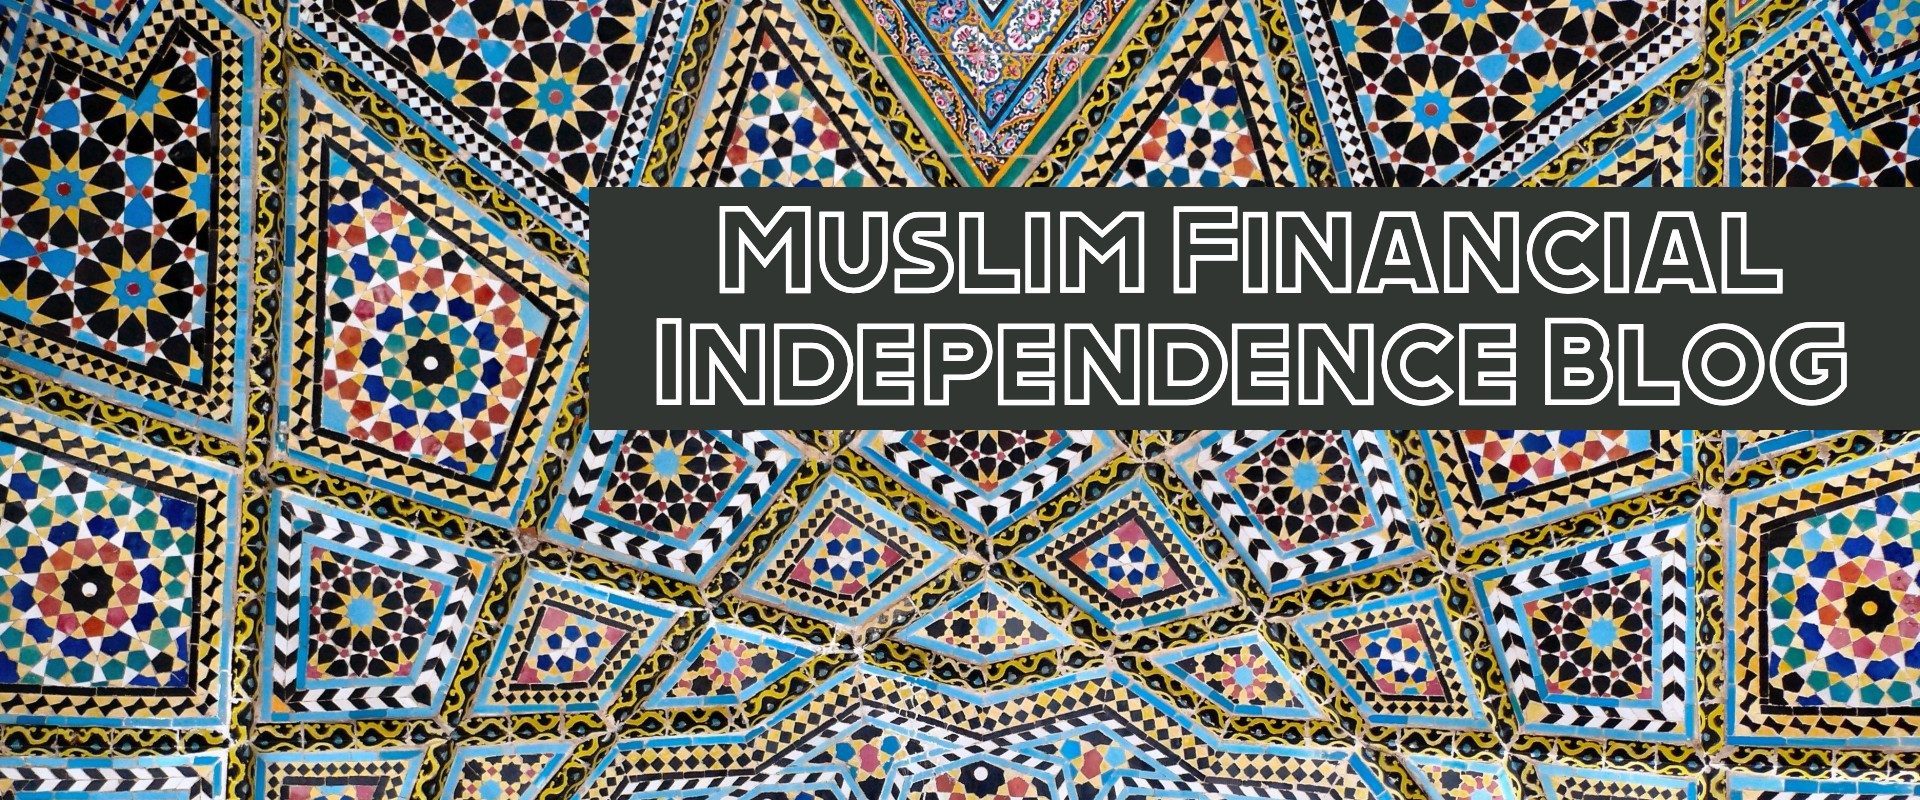 Muslim Financial Independence